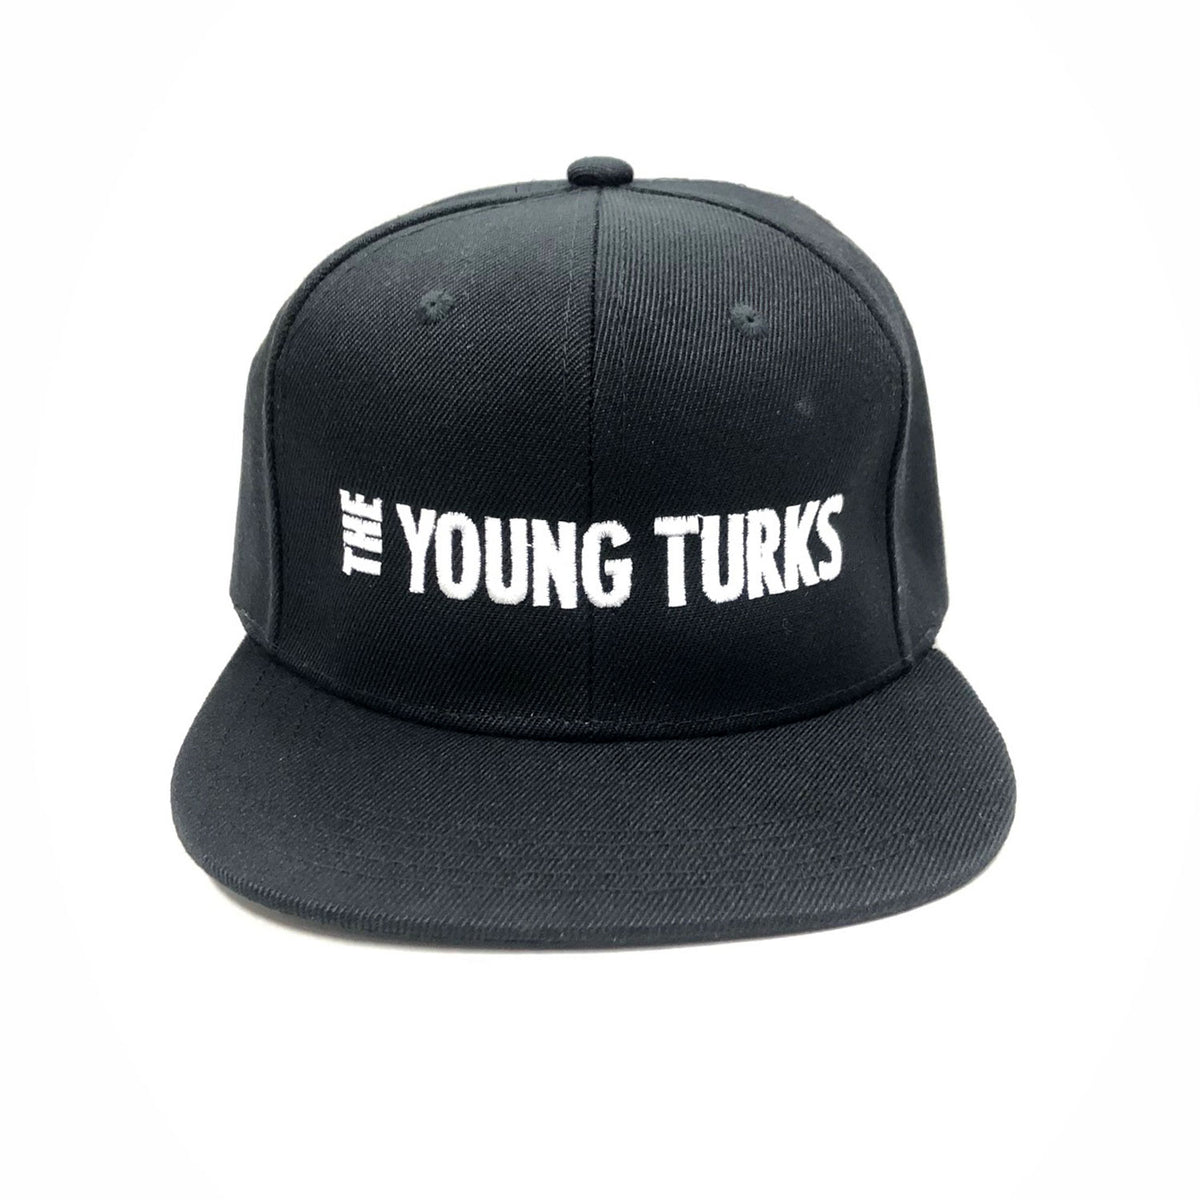 La gorra de Young Turks